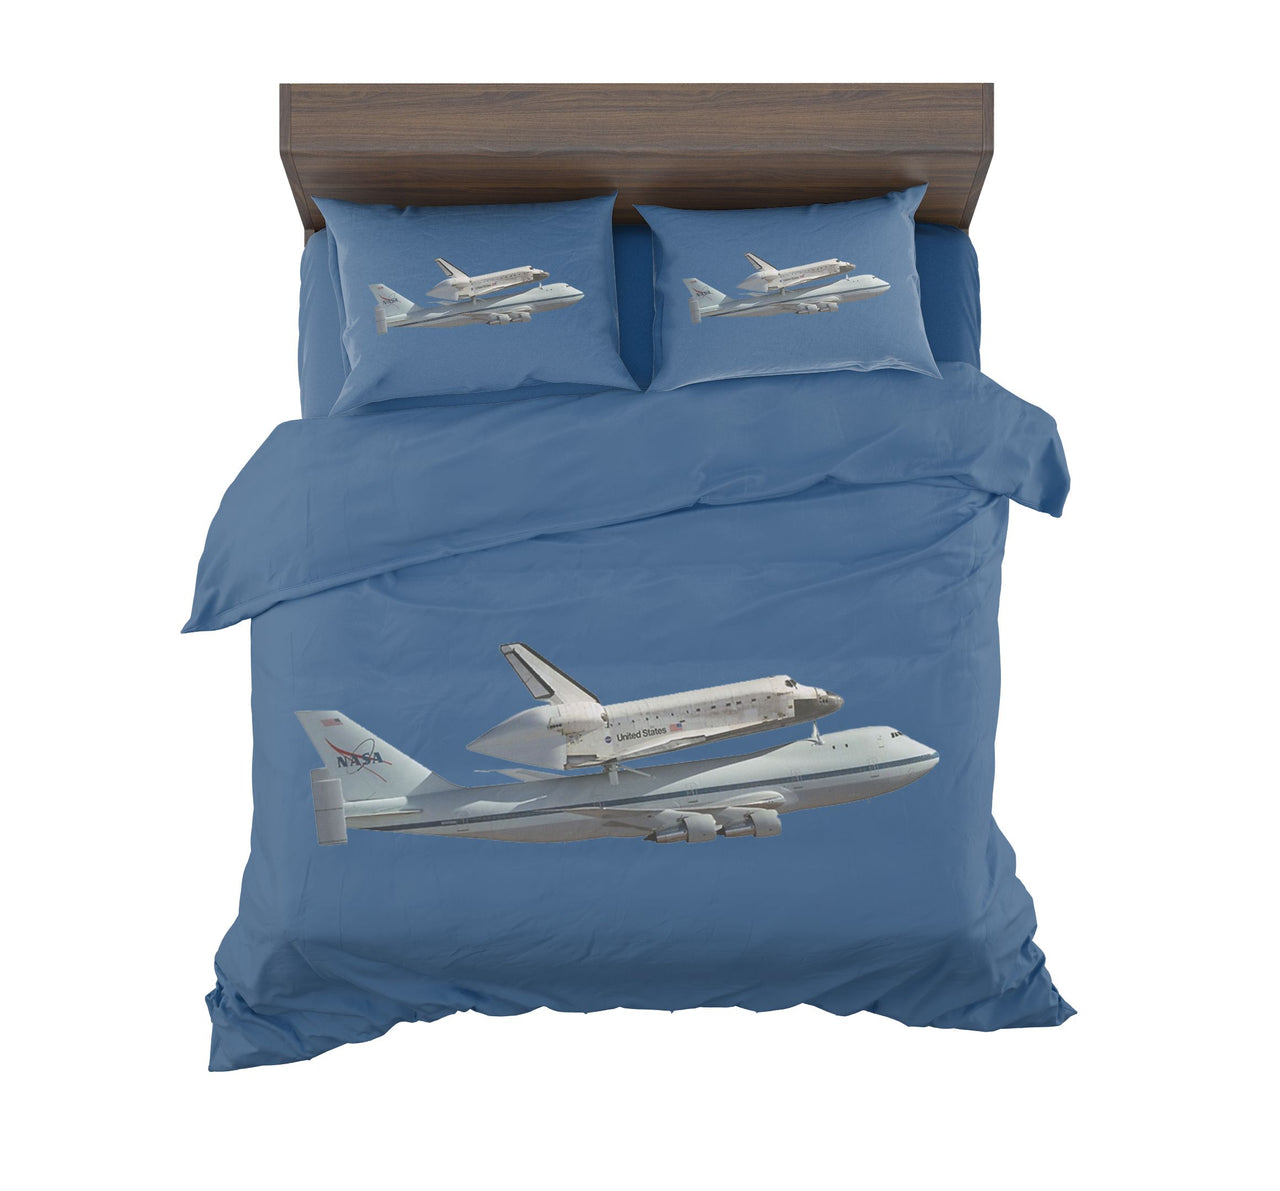 Space shuttle on 747 Designed Bedding Sets